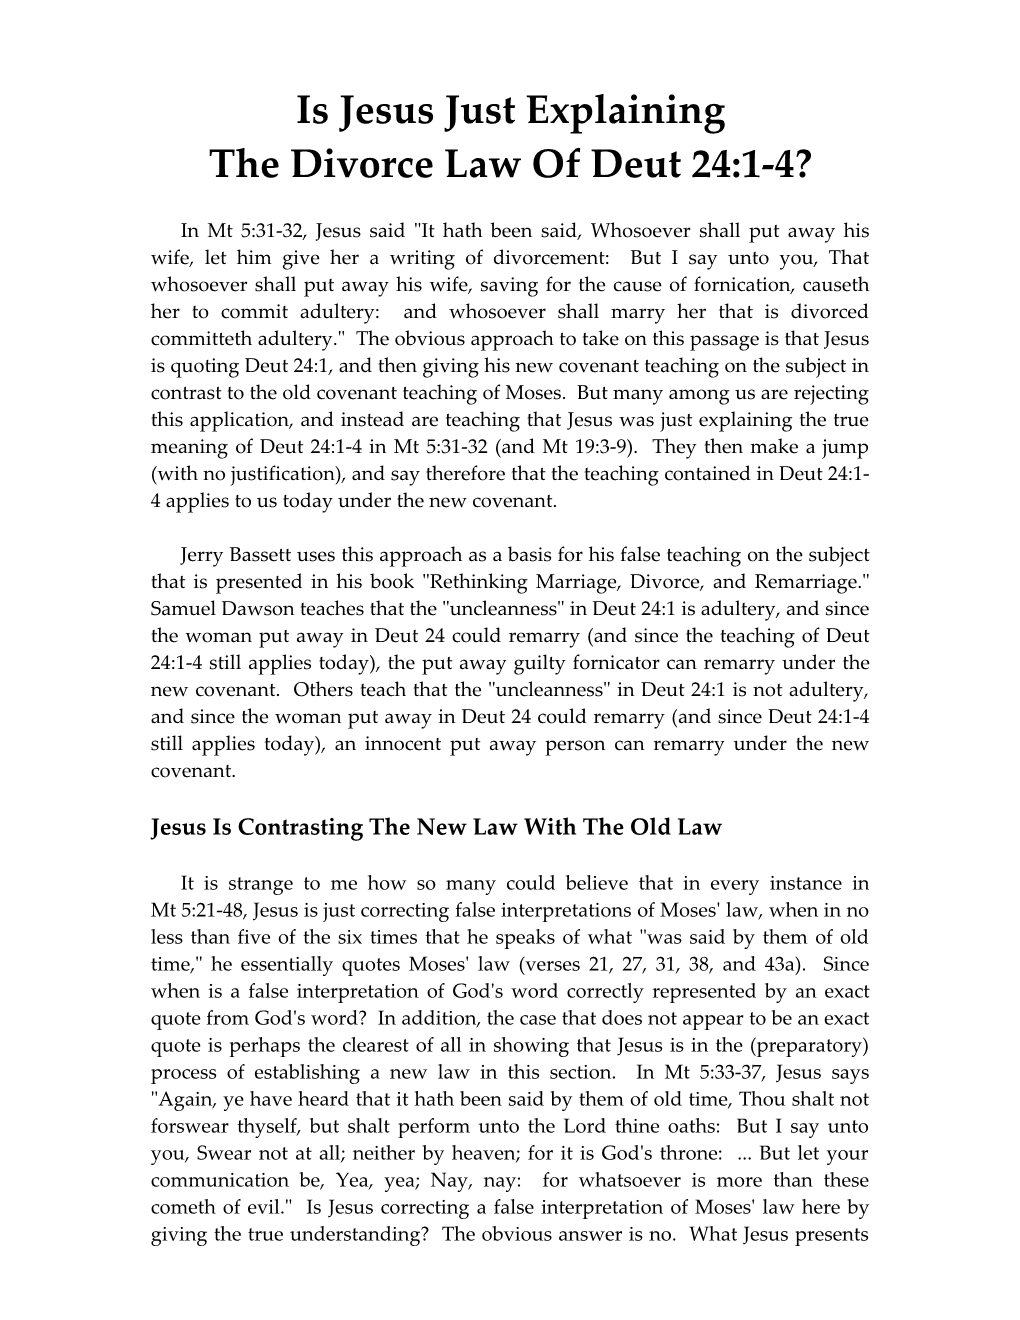 The Divorce Law of Deut 24:1-4?